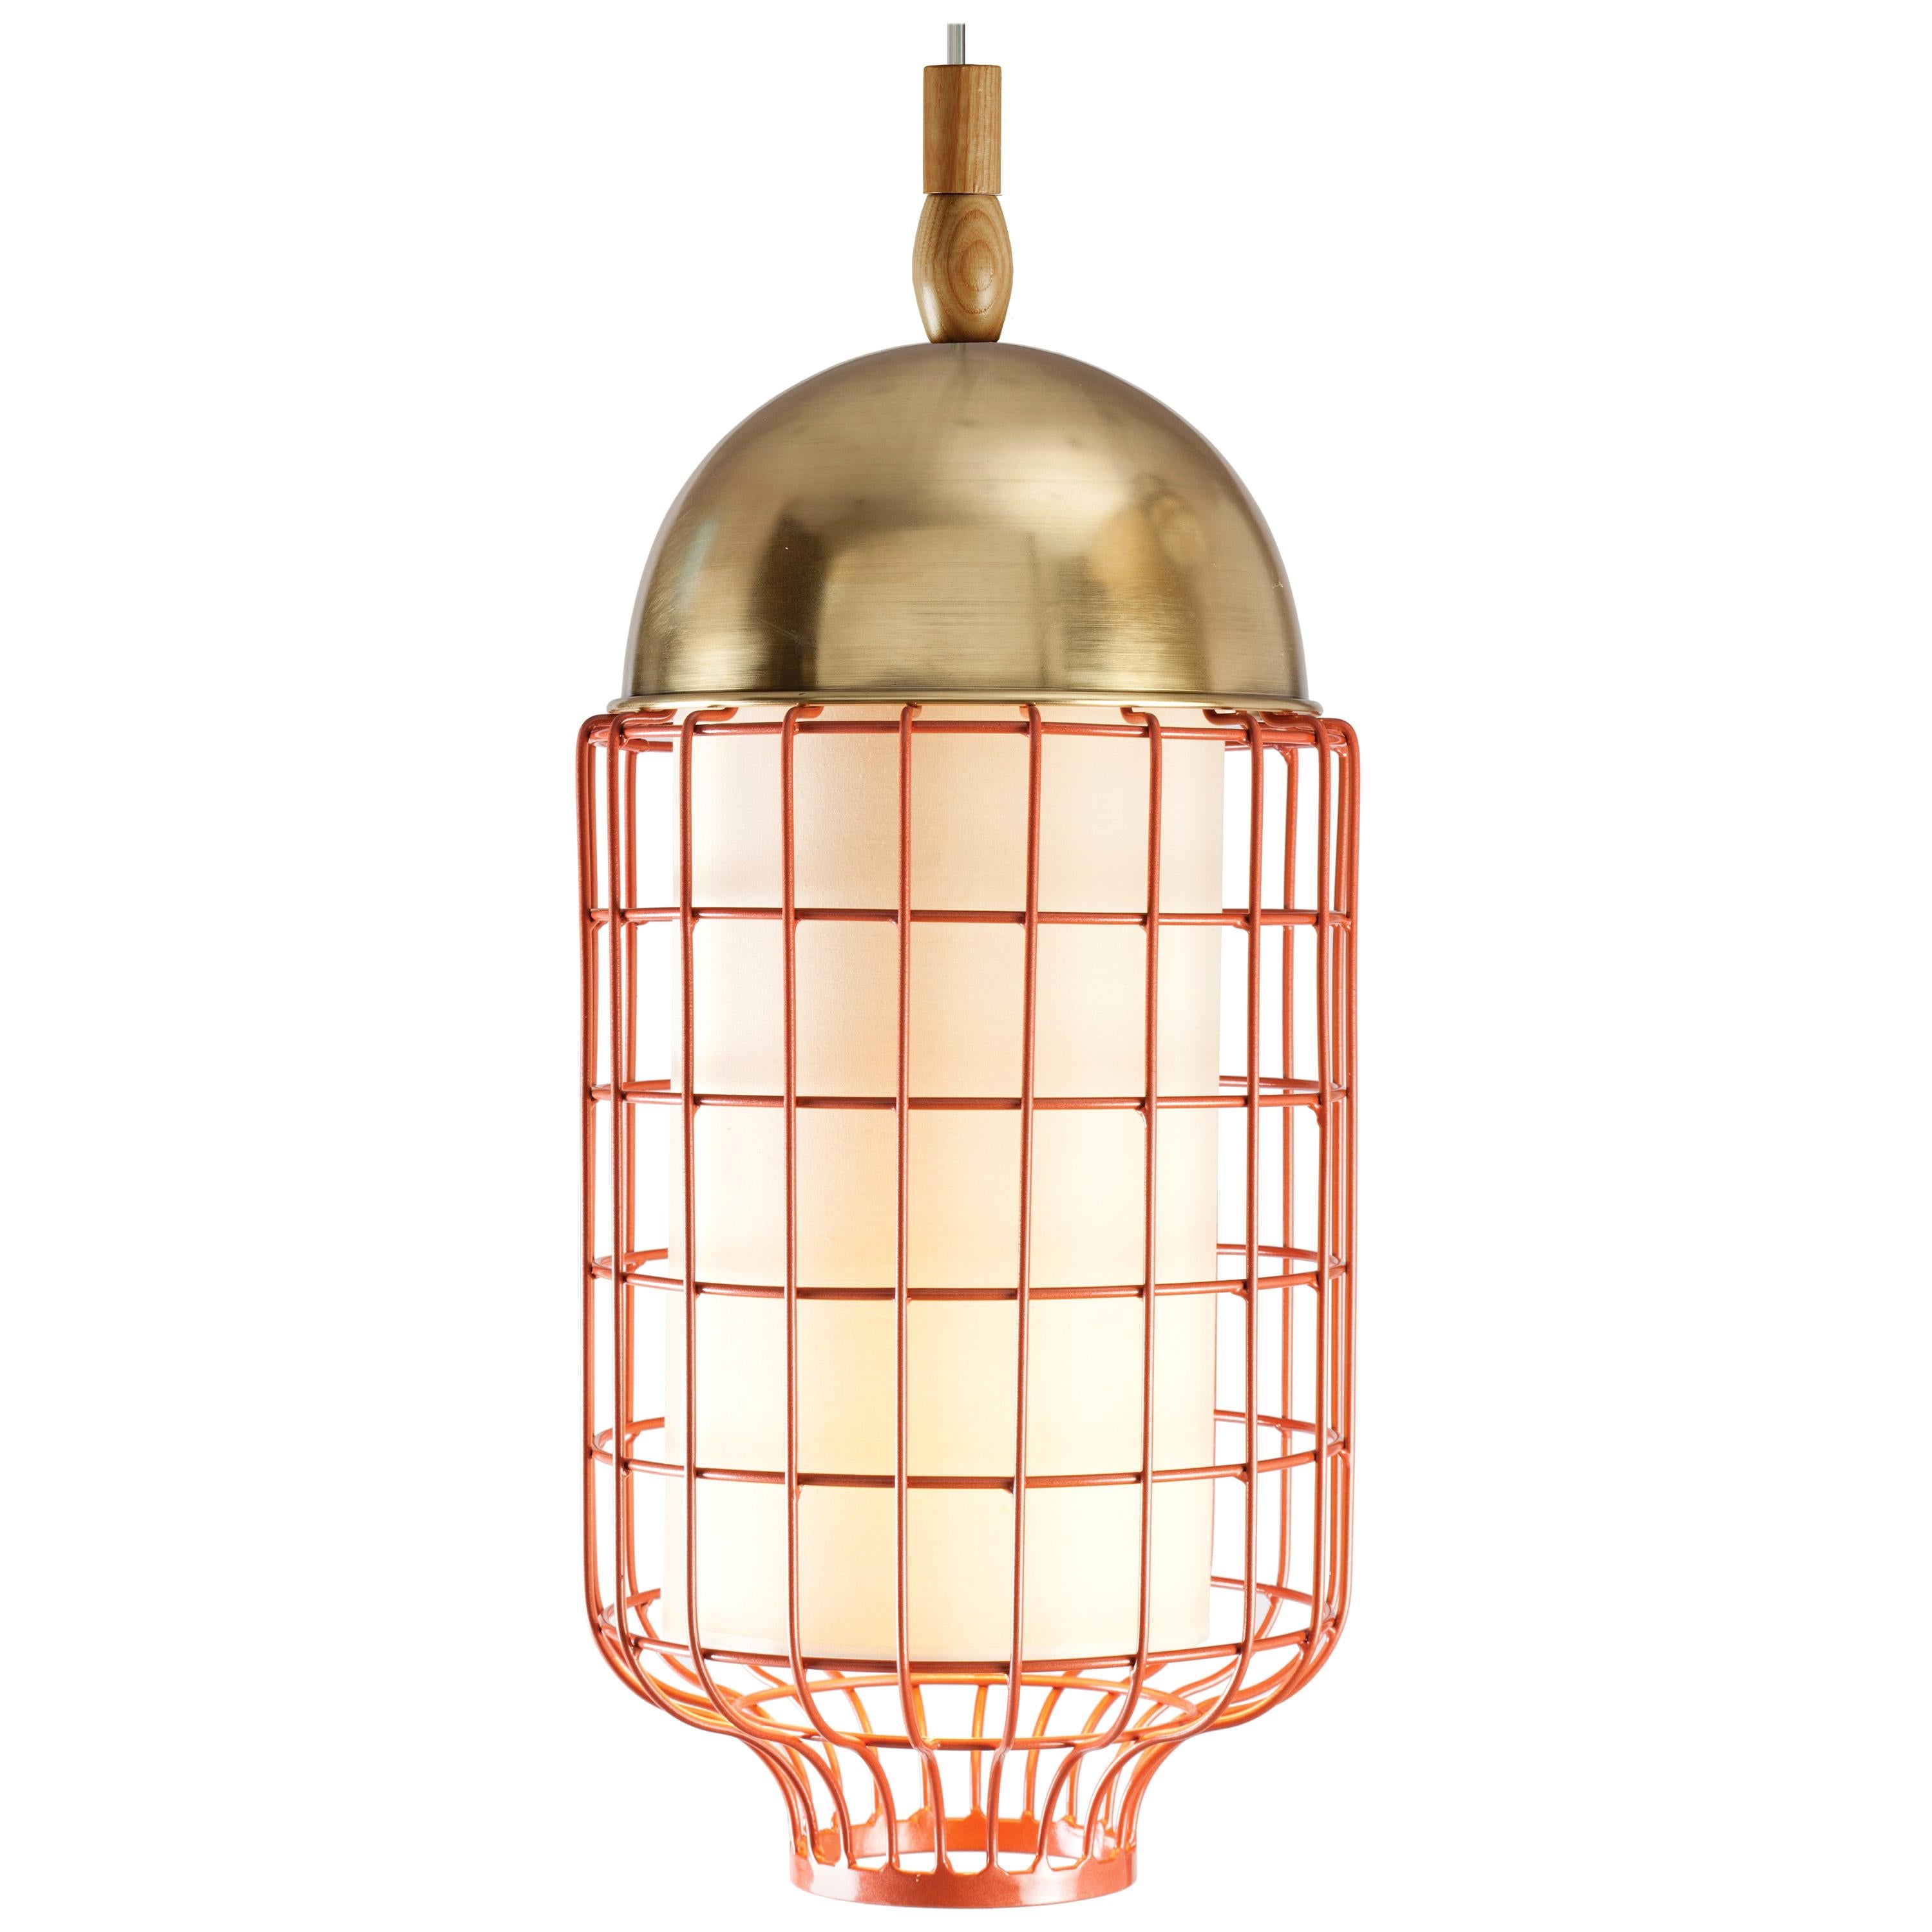 21st Century Art Deco Magnolia II Pendant Lamp Polished Brass and Copper color